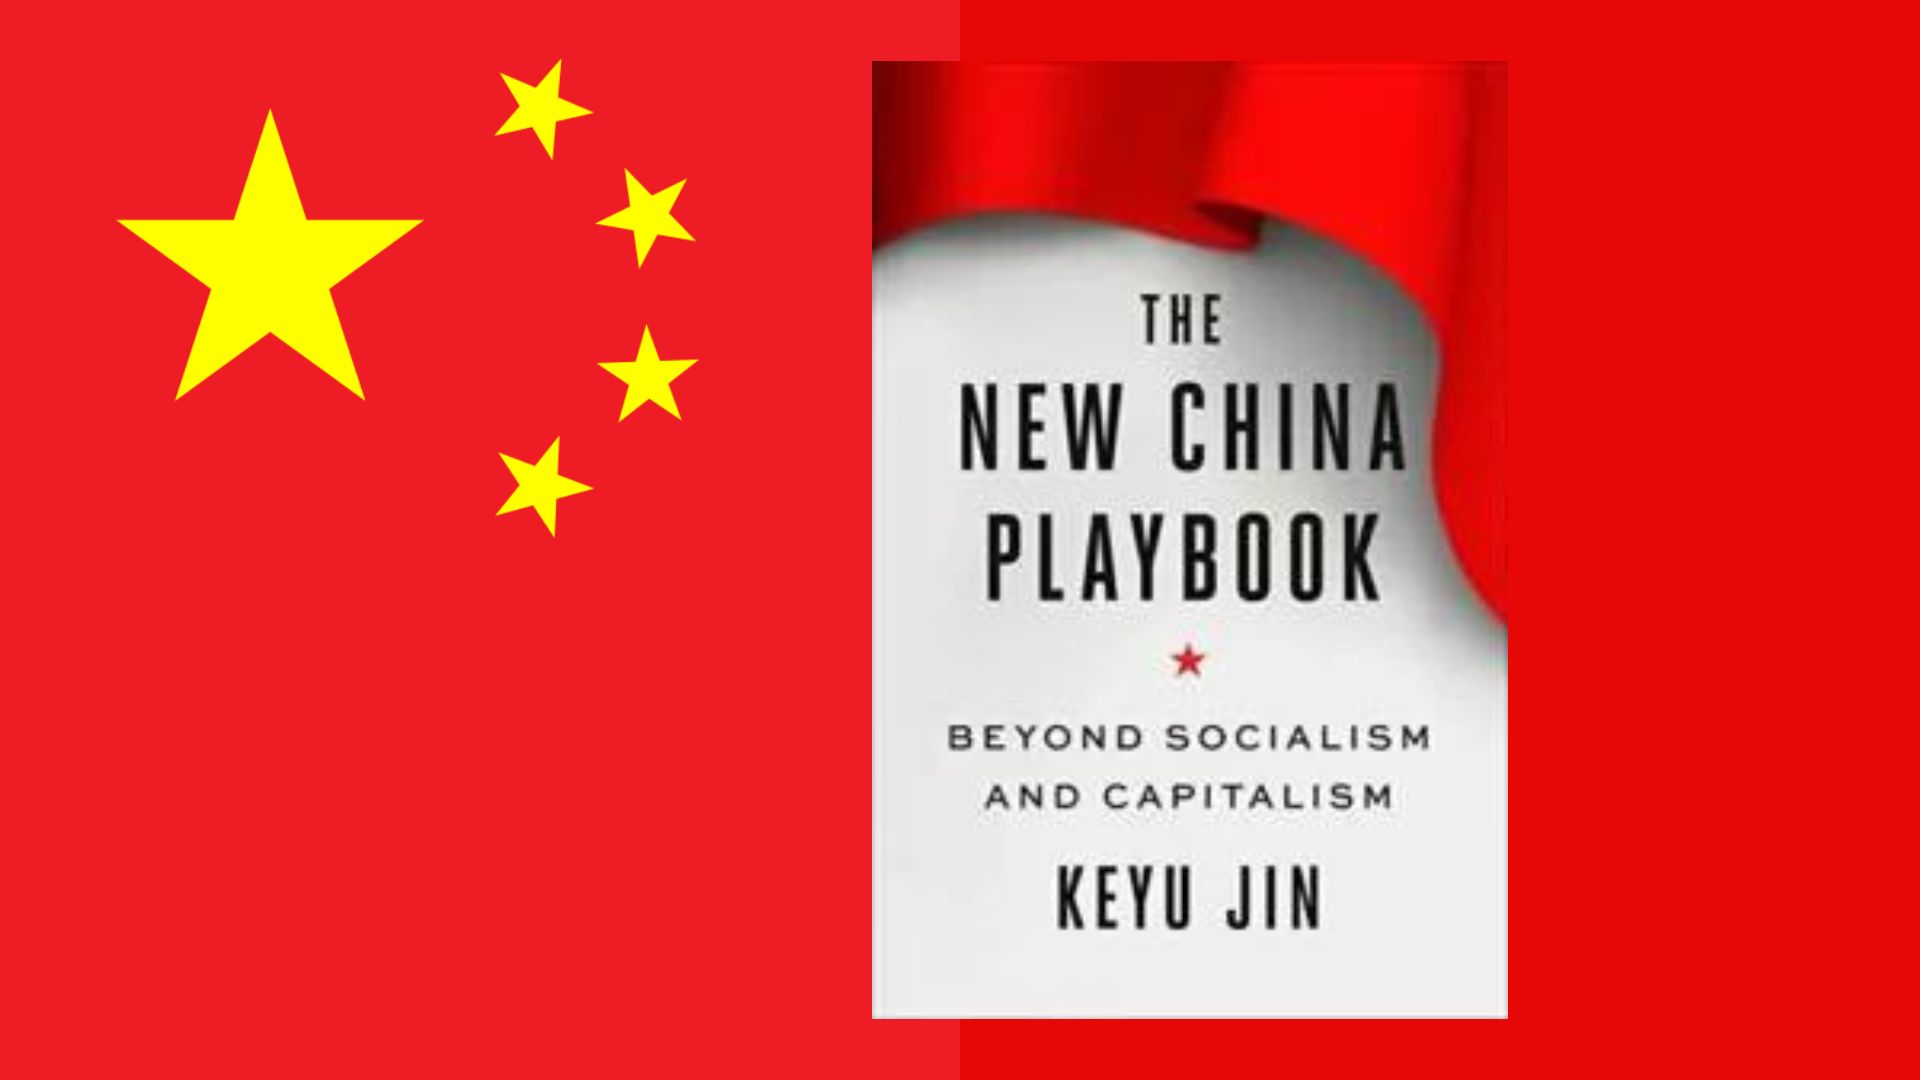 Leituras sobre a China: “The New China Playbook” de Keyu Jin